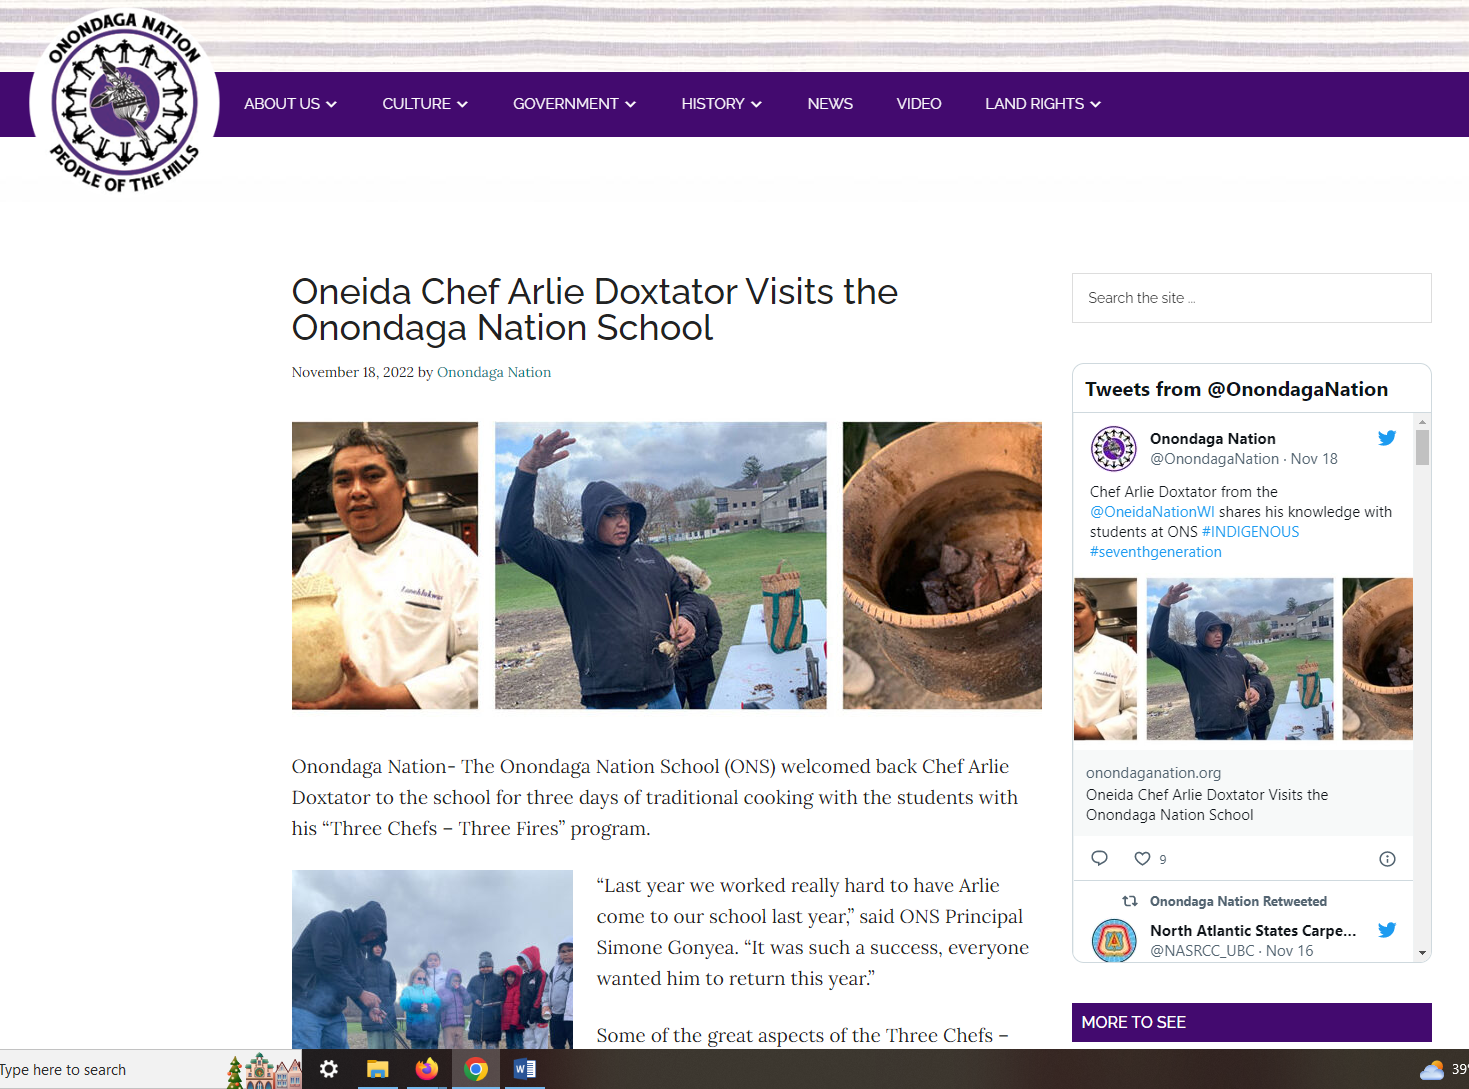 oneida chef arlie doxtator visits onondaga nation school